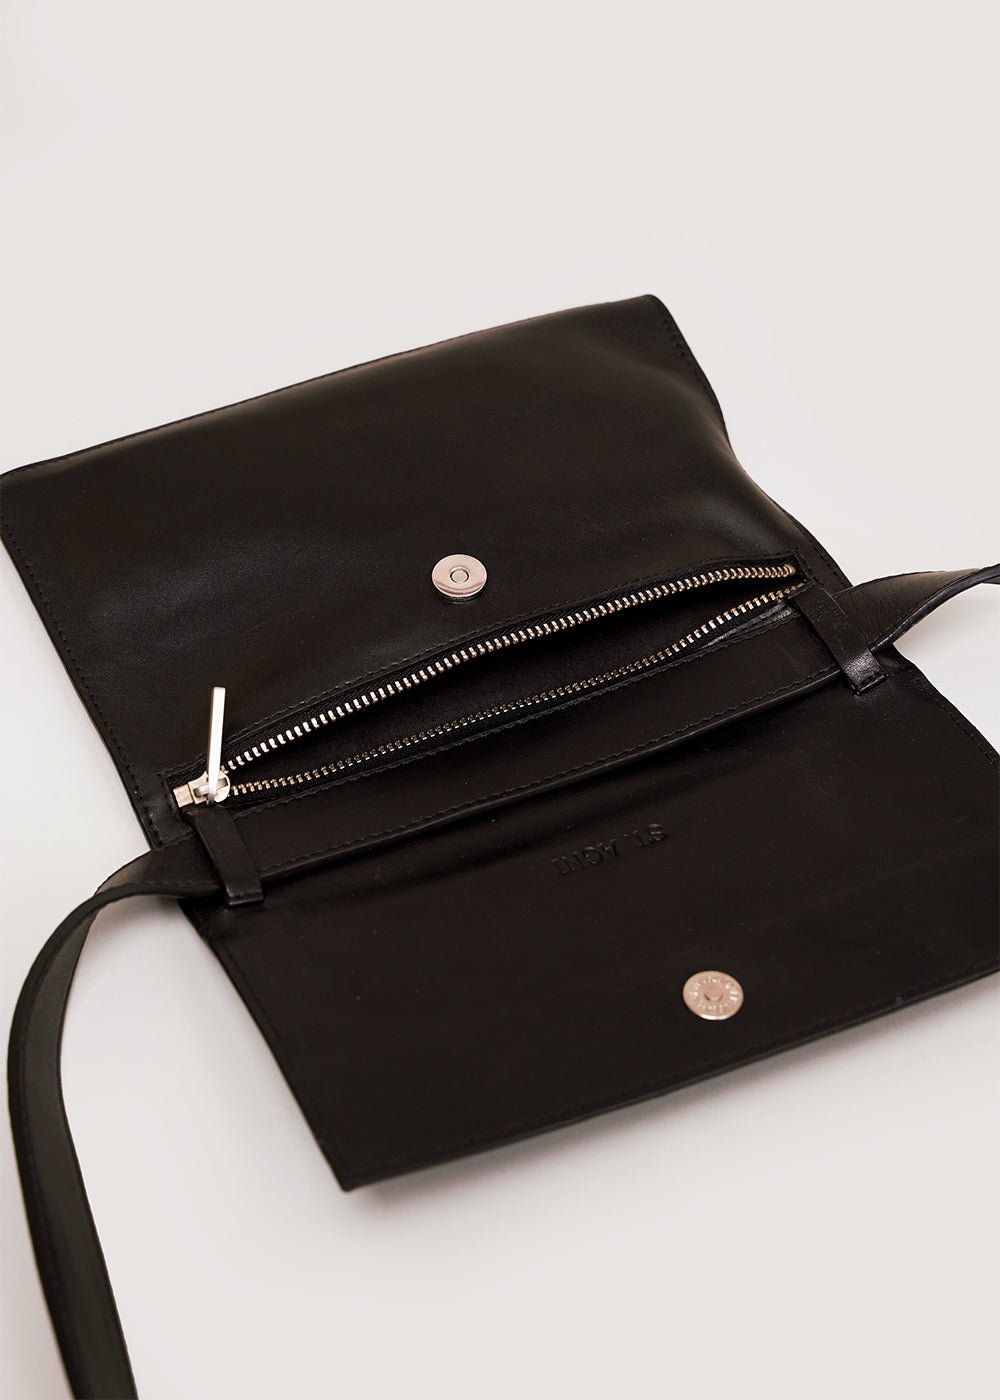 St. Agni Black Mini Pocket Belt Bag - New Classics Studios Sustainable Ethical Fashion Canada